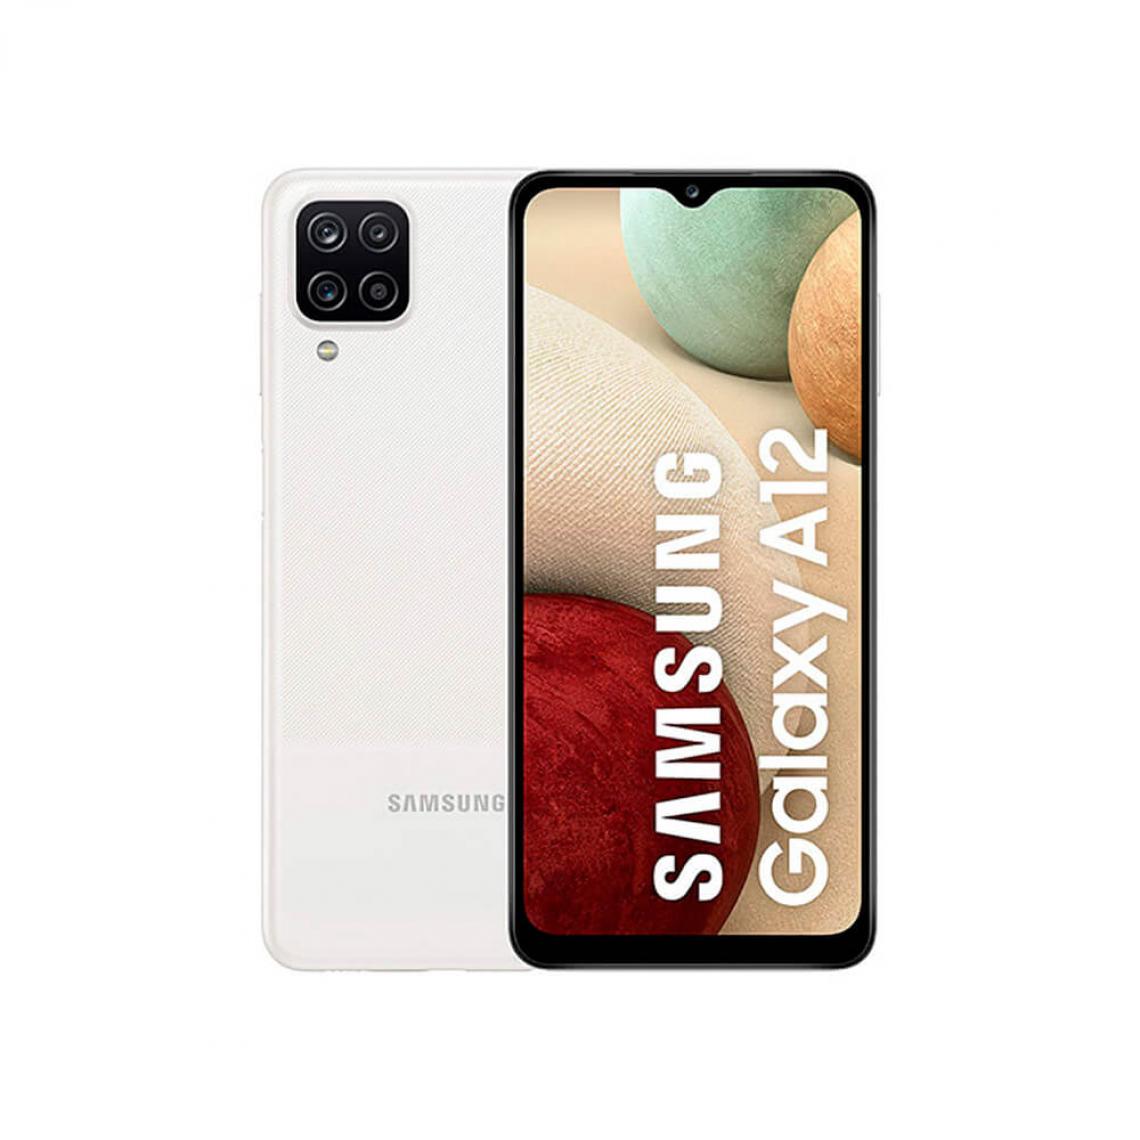 Samsung - Samsung Galaxy A12 4Go/64Go Blanc Double SIM Avec NFC SM-A127 - Smartphone Android